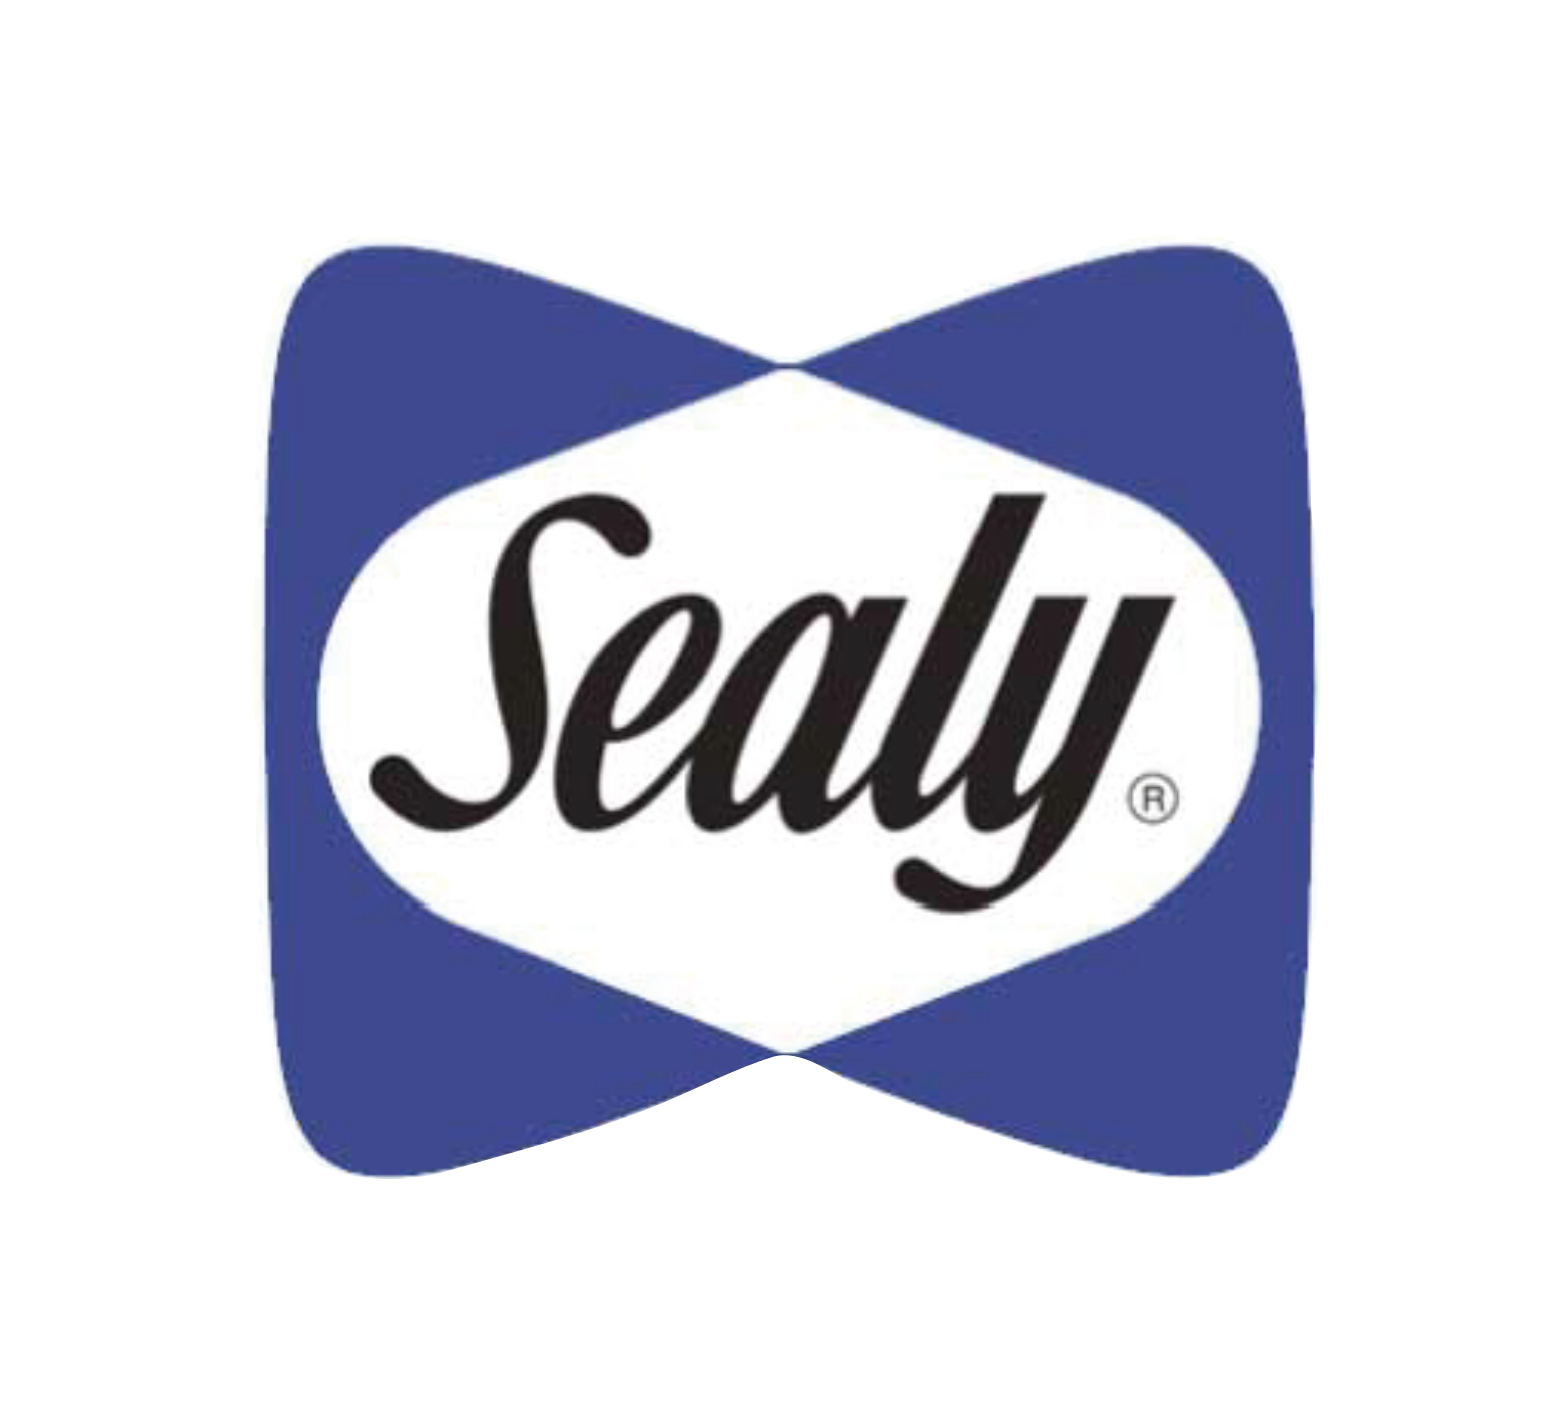 Sealy Brand Logo